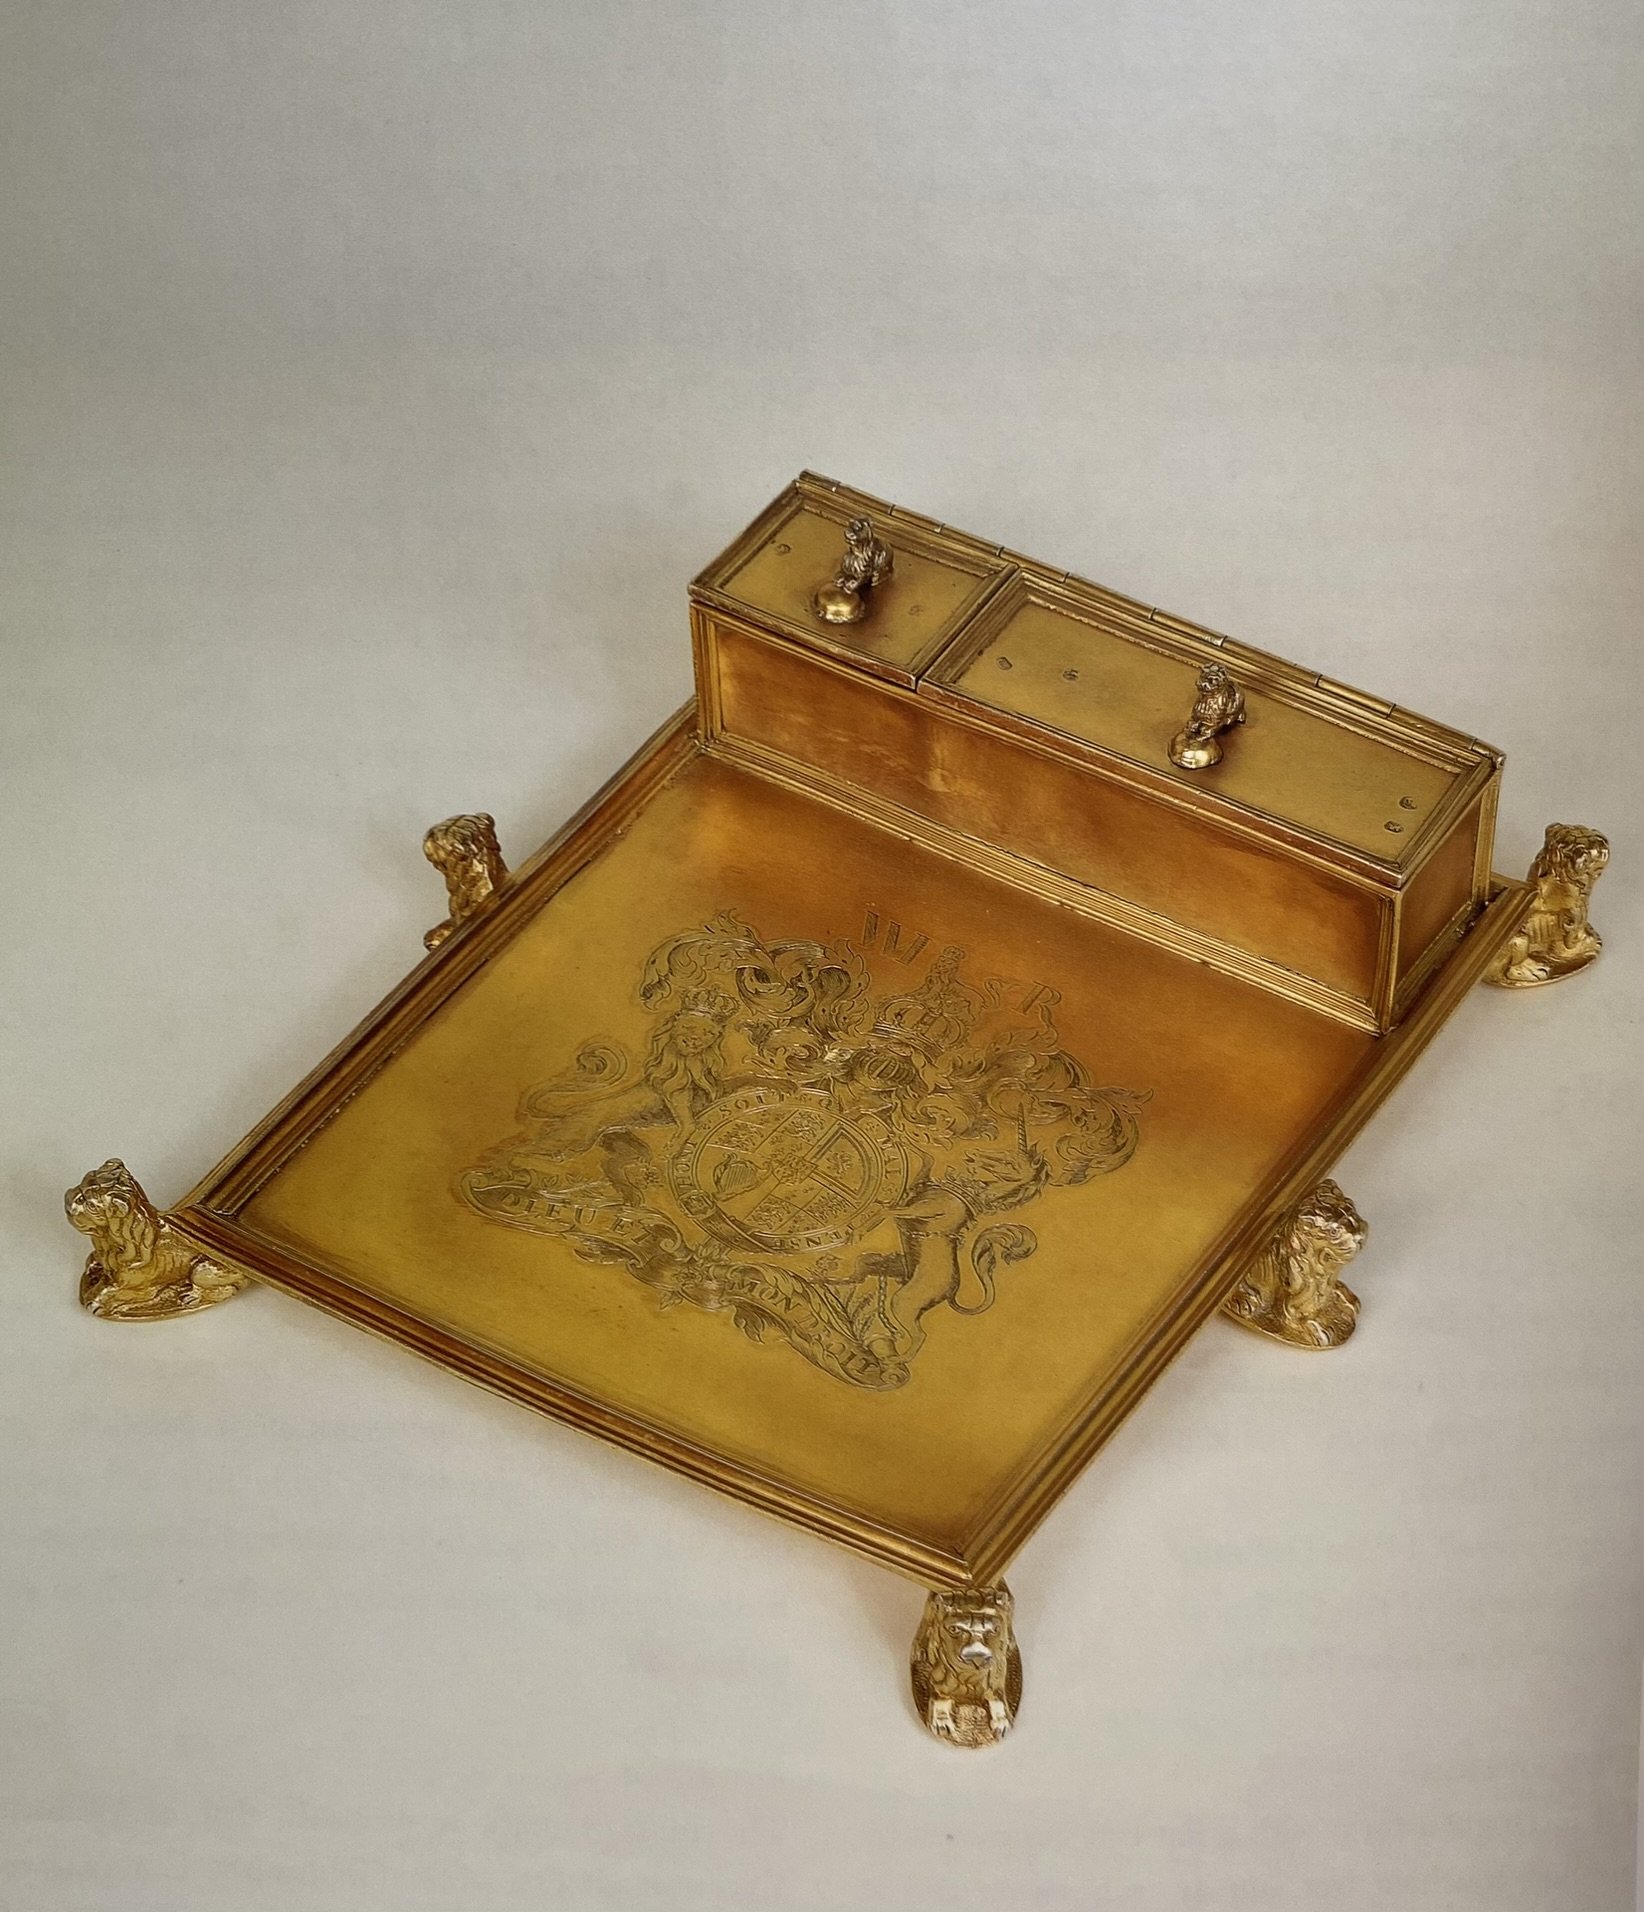 Caddinet - an engraved tray-like items